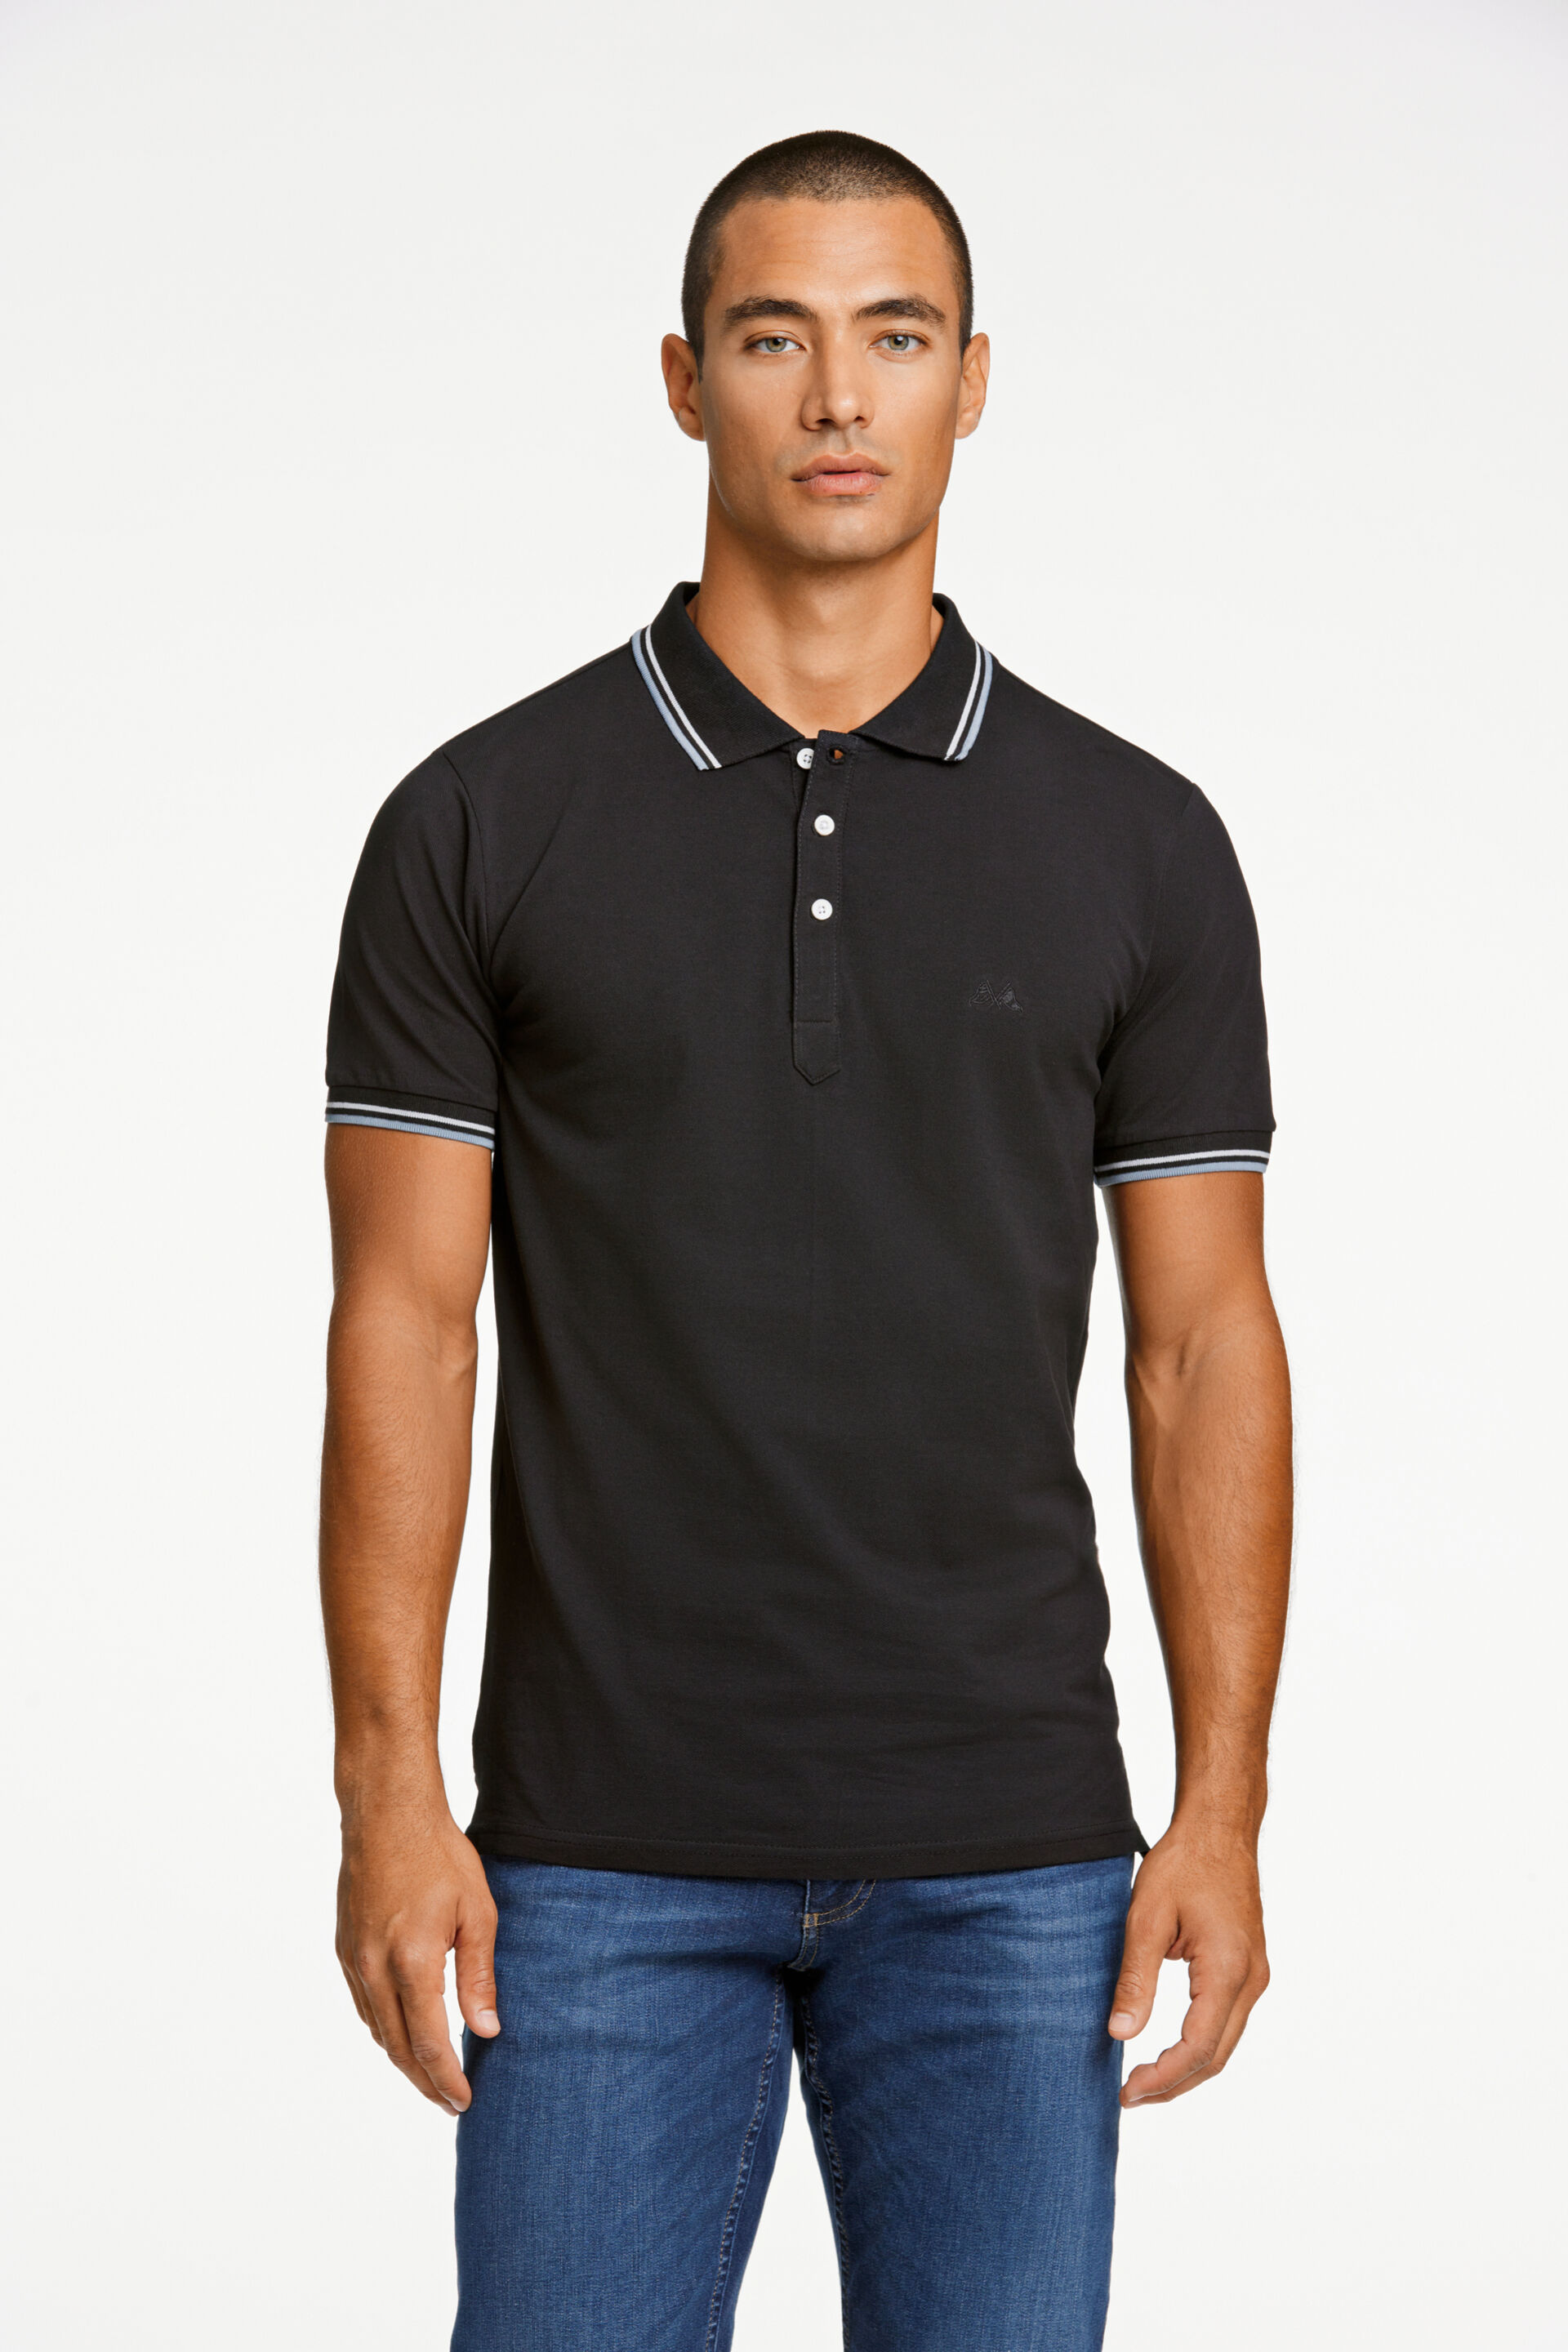 Polo shirt Polo shirt Black 30-404010